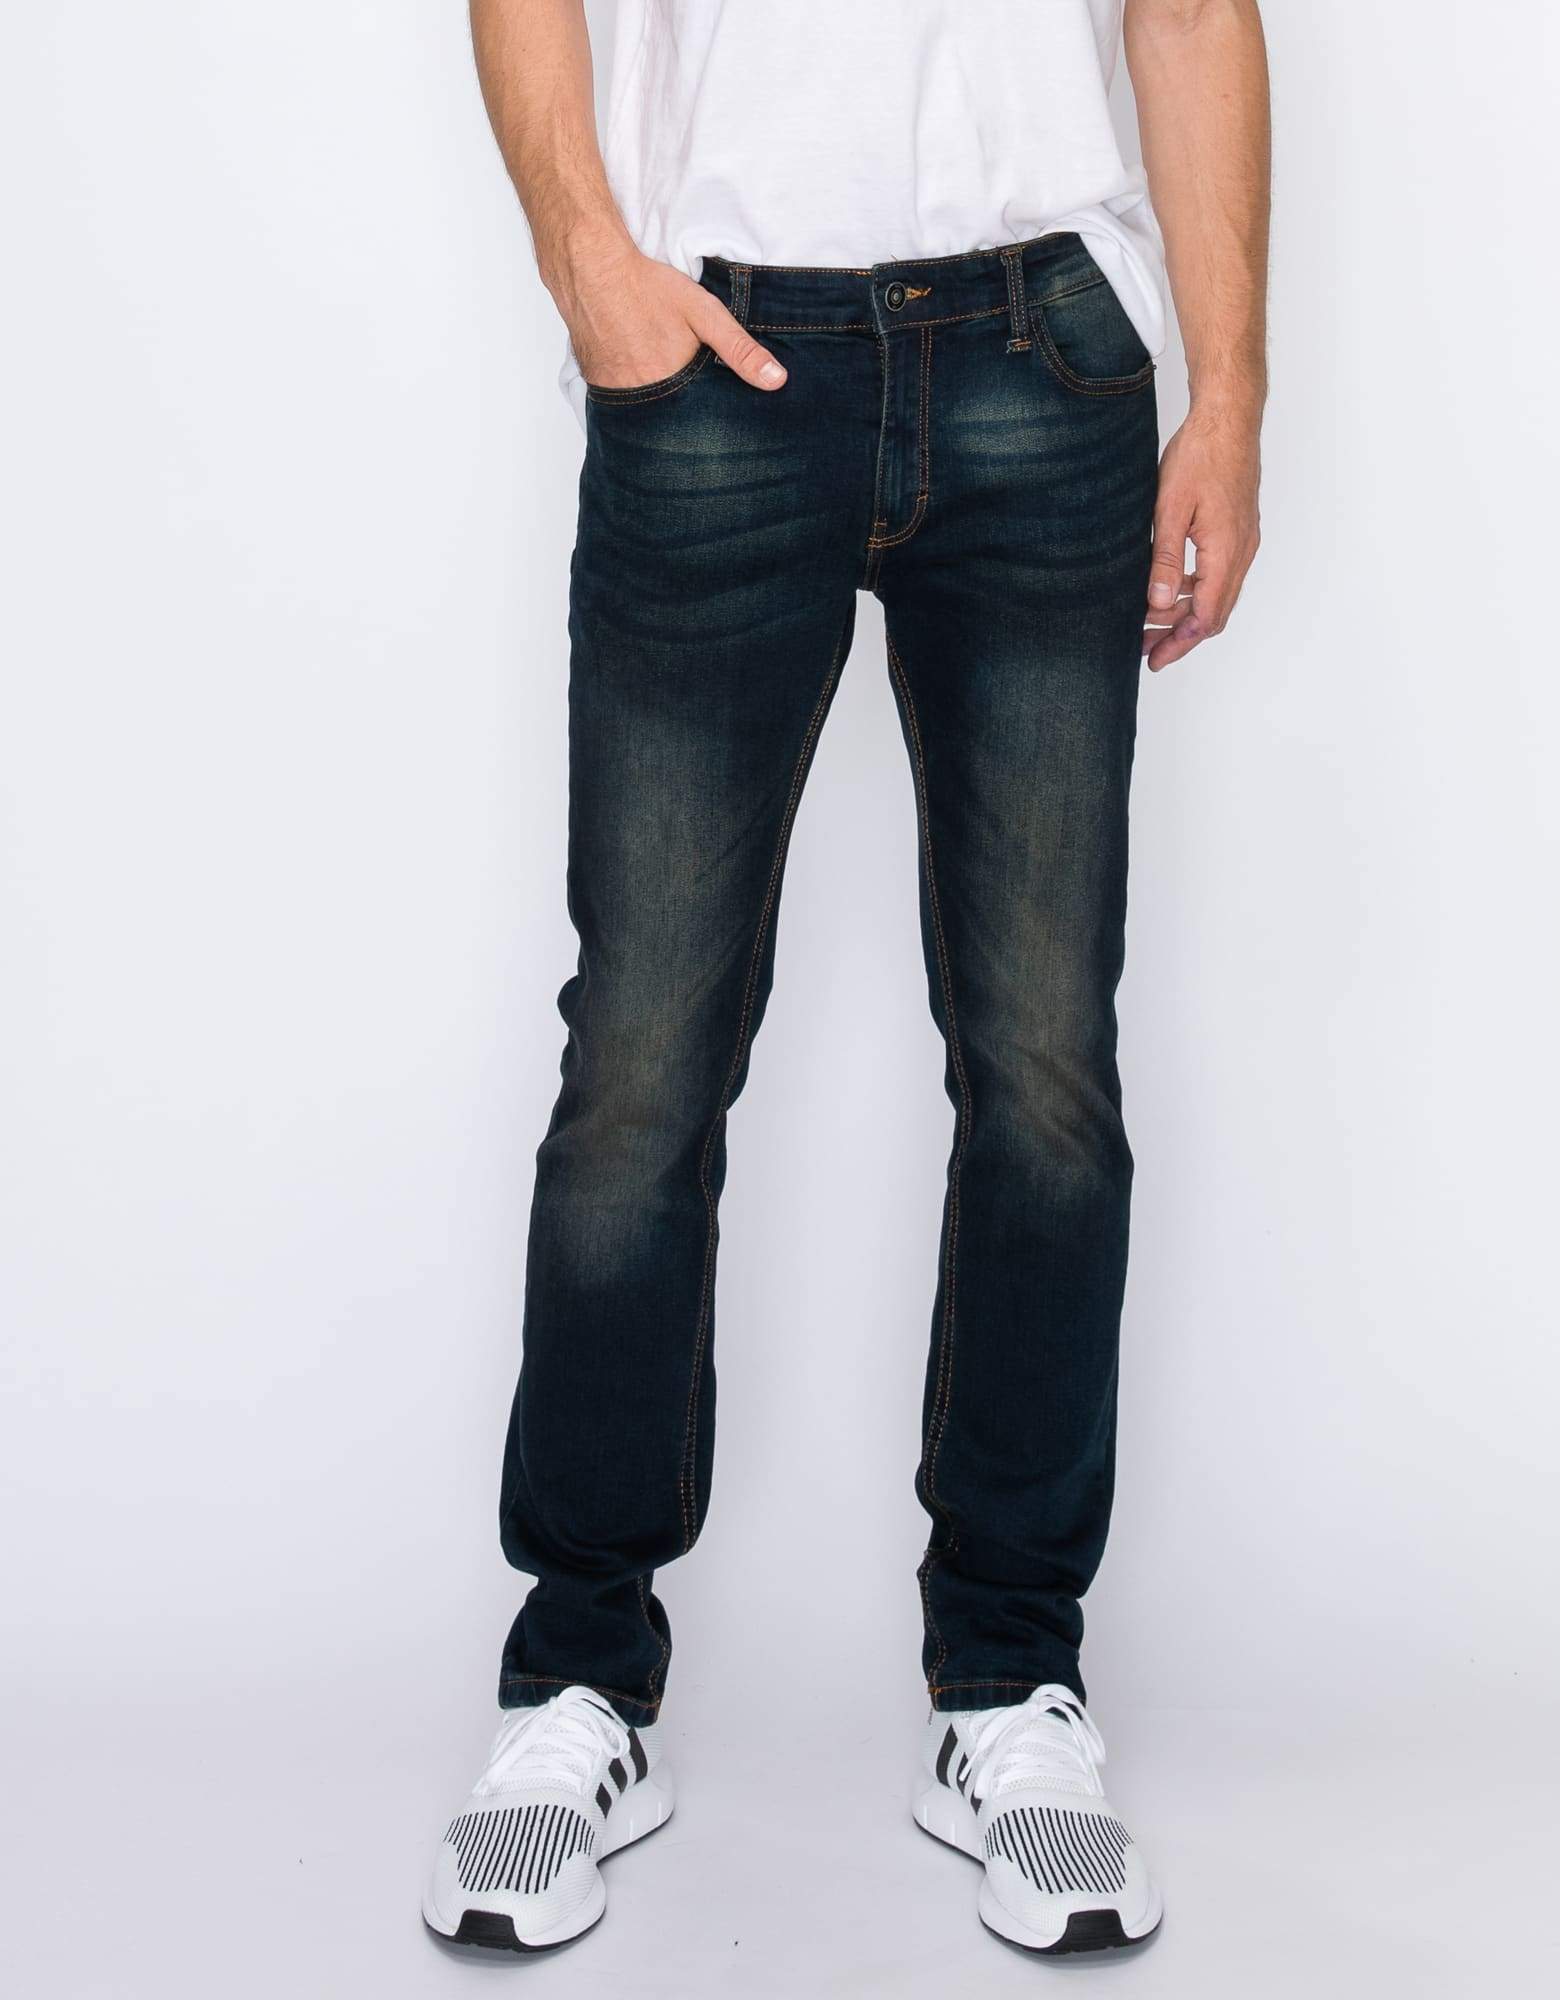 RING OF FIRE Men's 5 Pockets Slim Denim Stretch Jeans - image 2 of 6